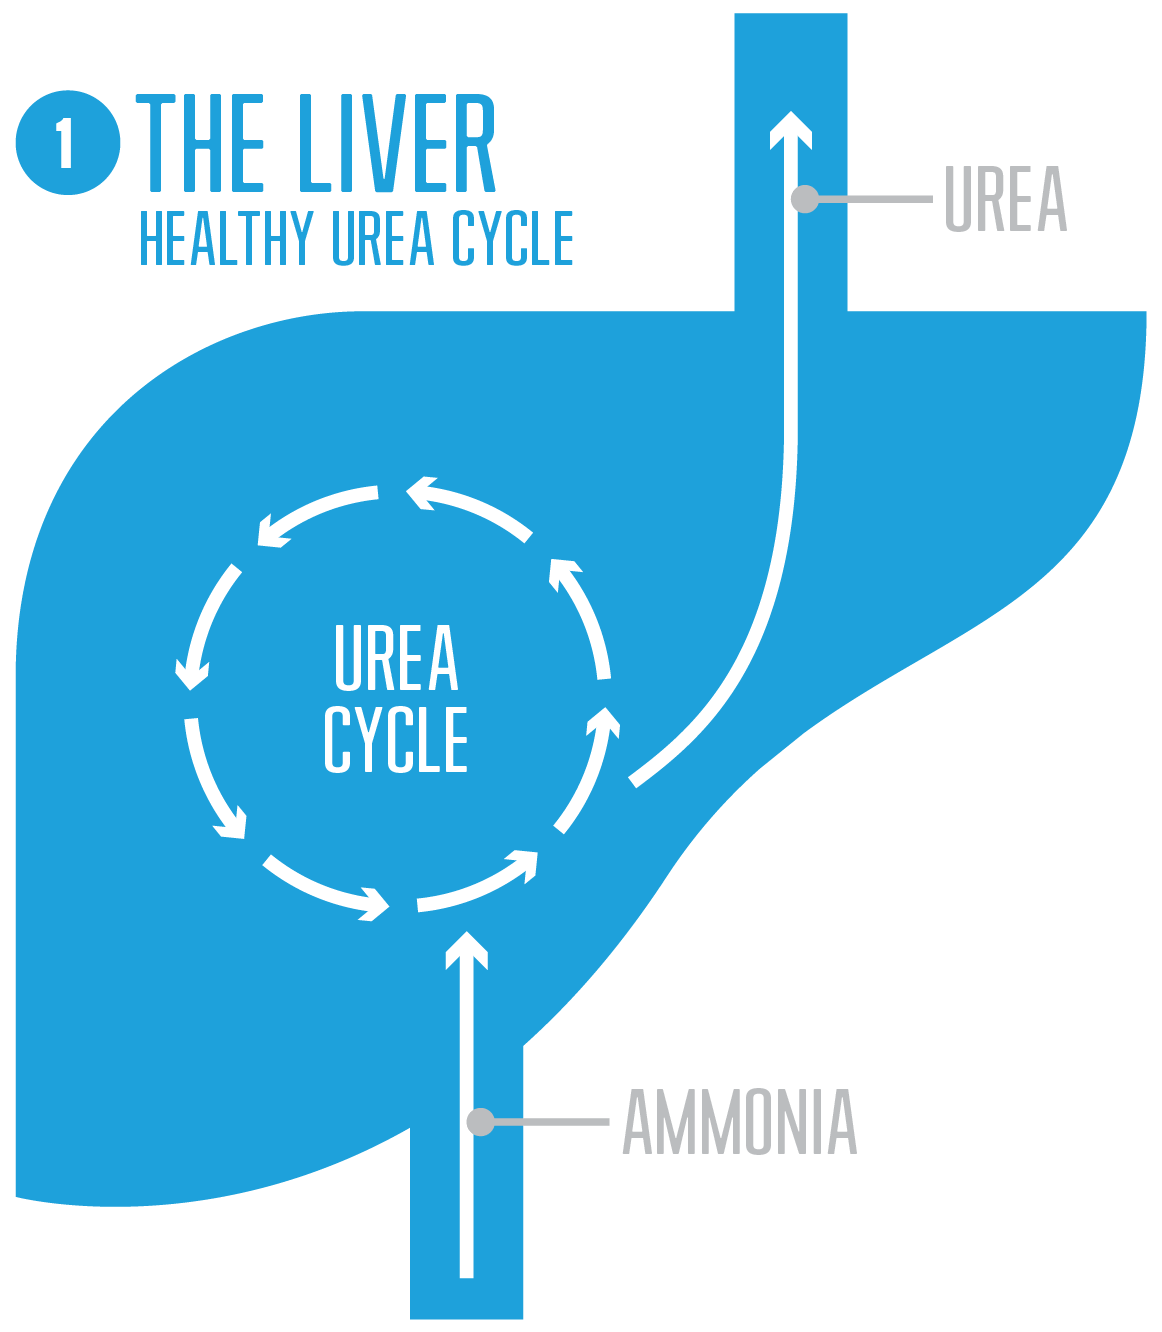 A healthy urea cycle.